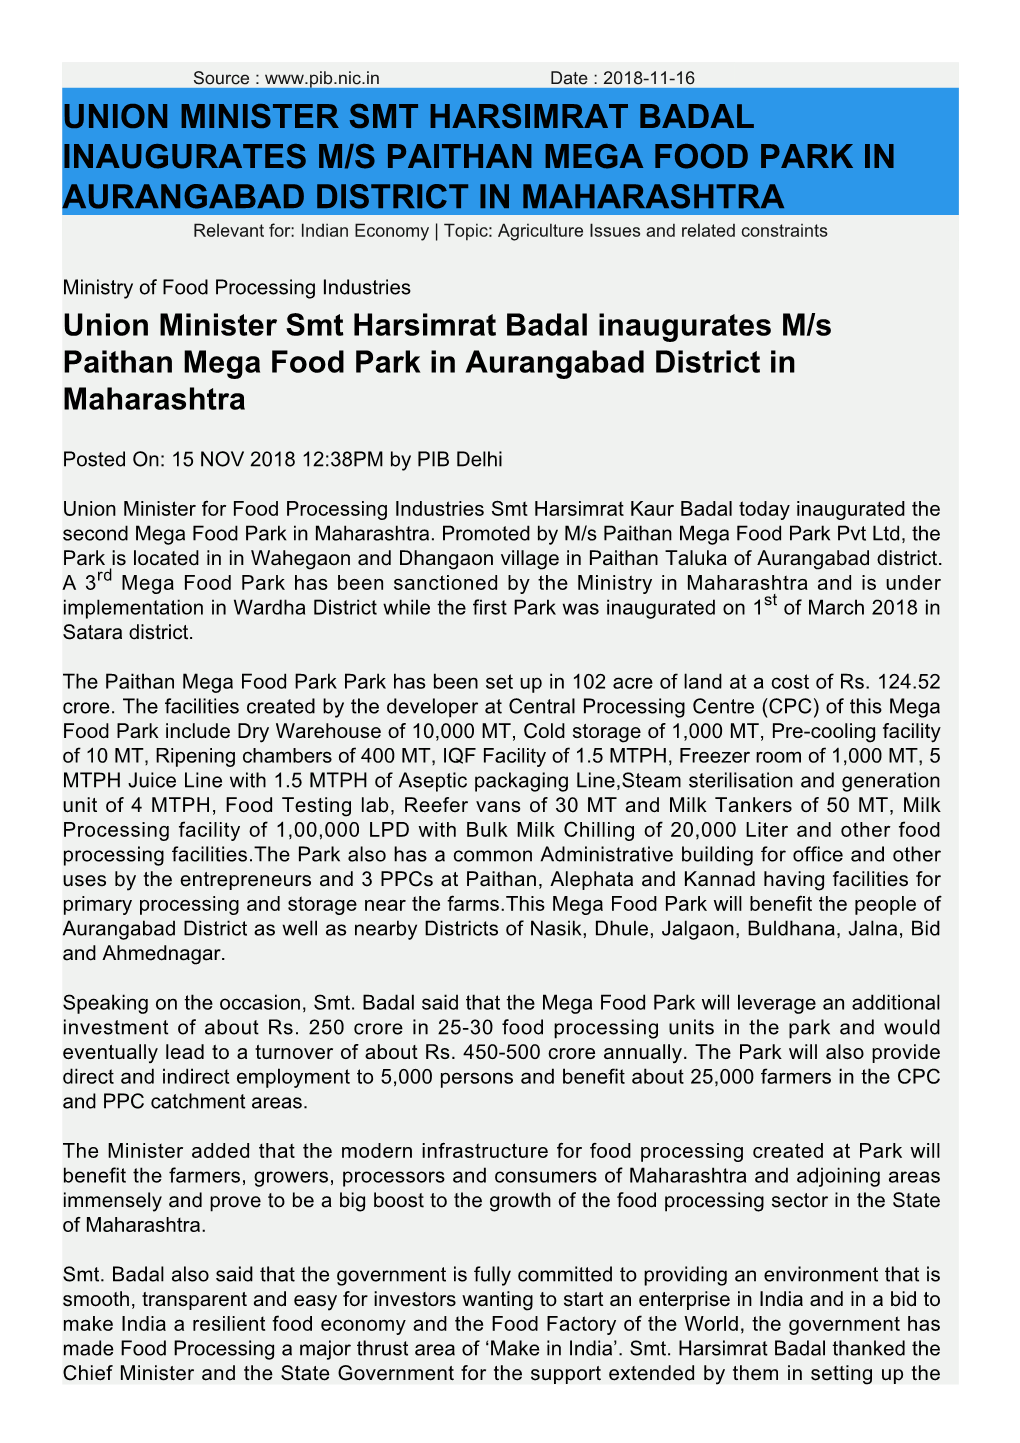 Union Minister Smt Harsimrat Badal Inaugurates M/S Paithan Mega